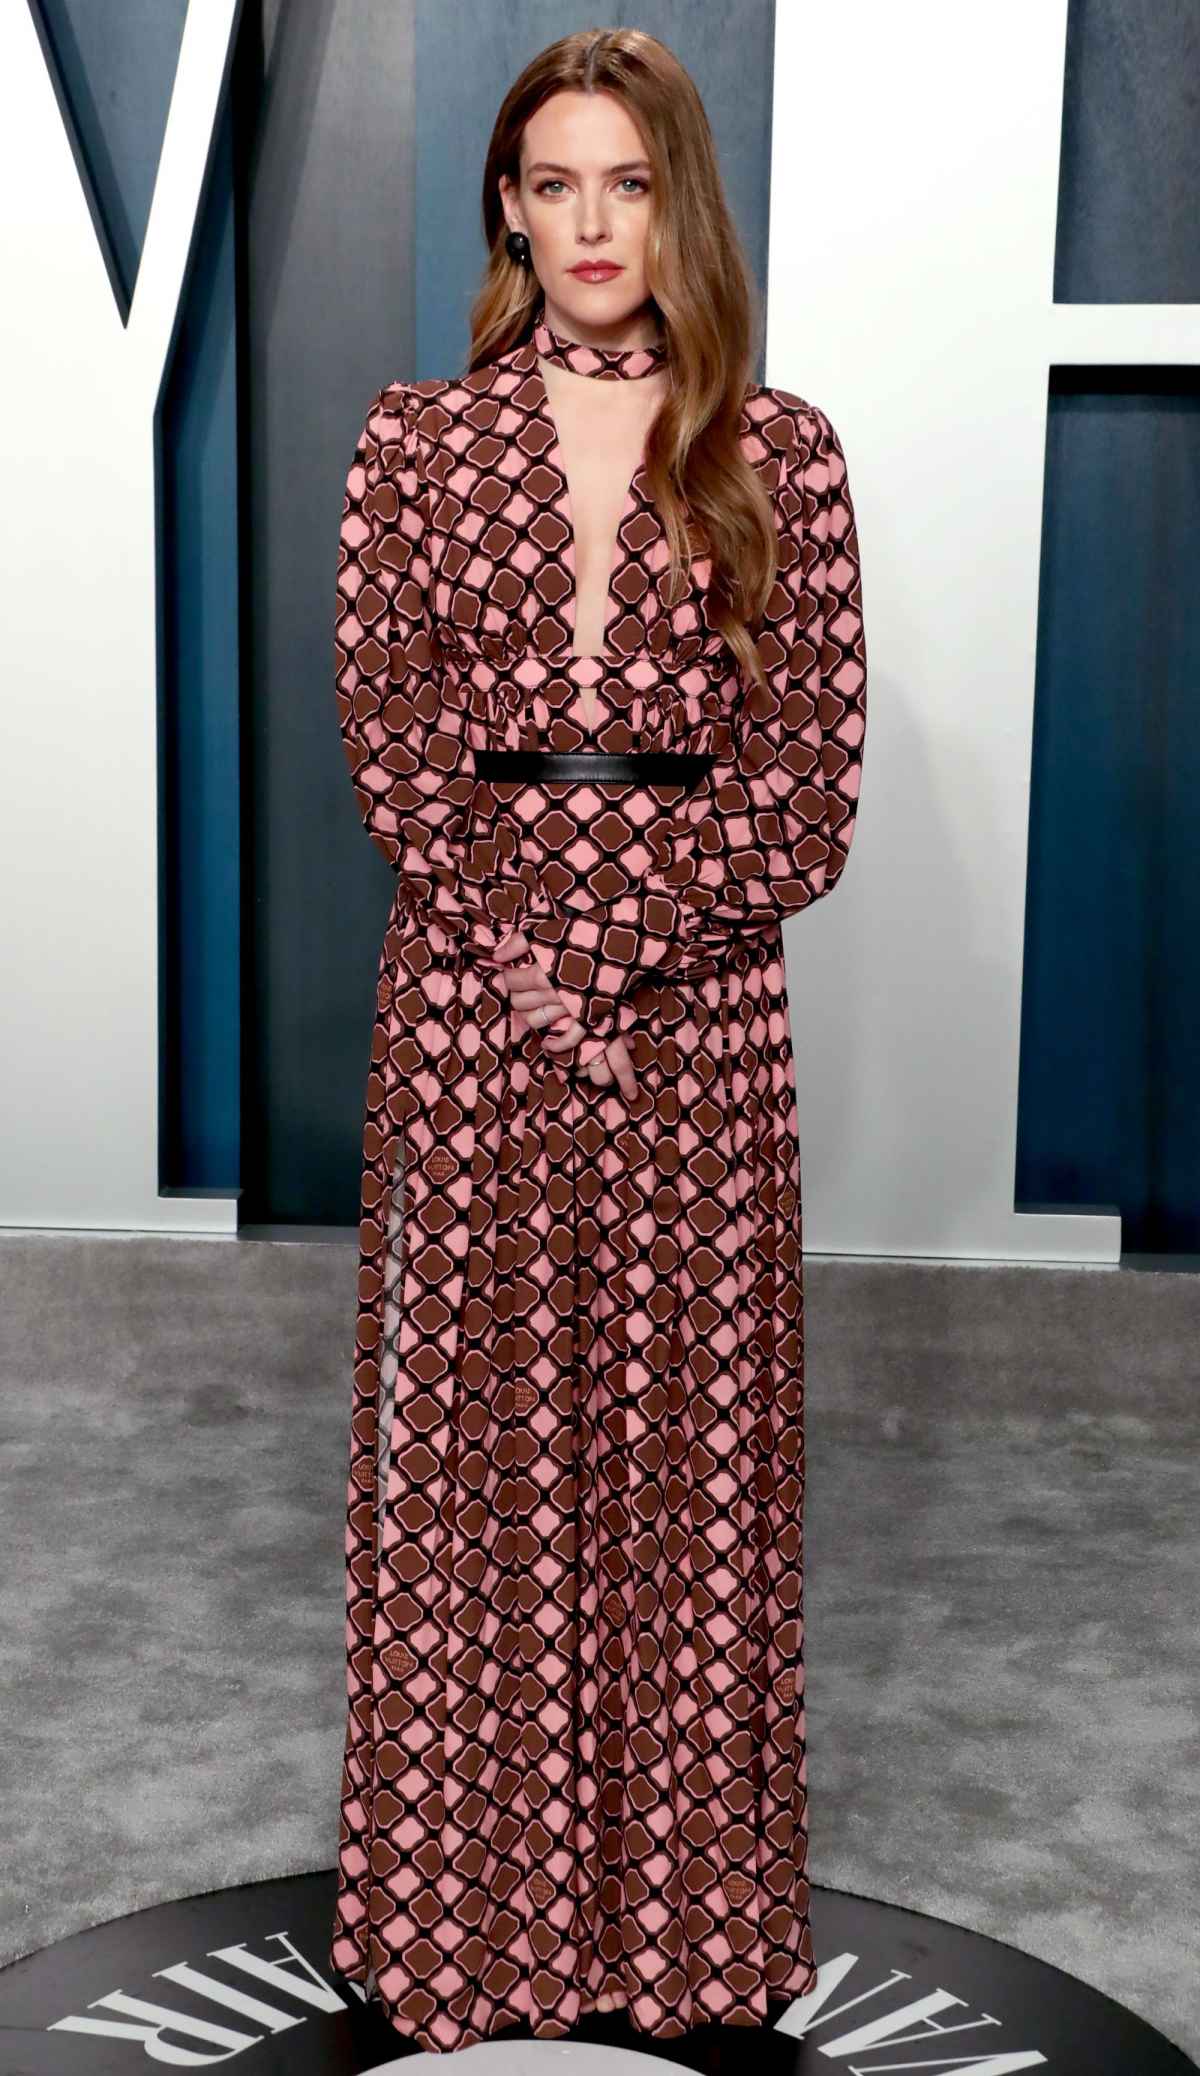 Sophie Turner's Louis Vuitton Minidress at the Grammys 2020